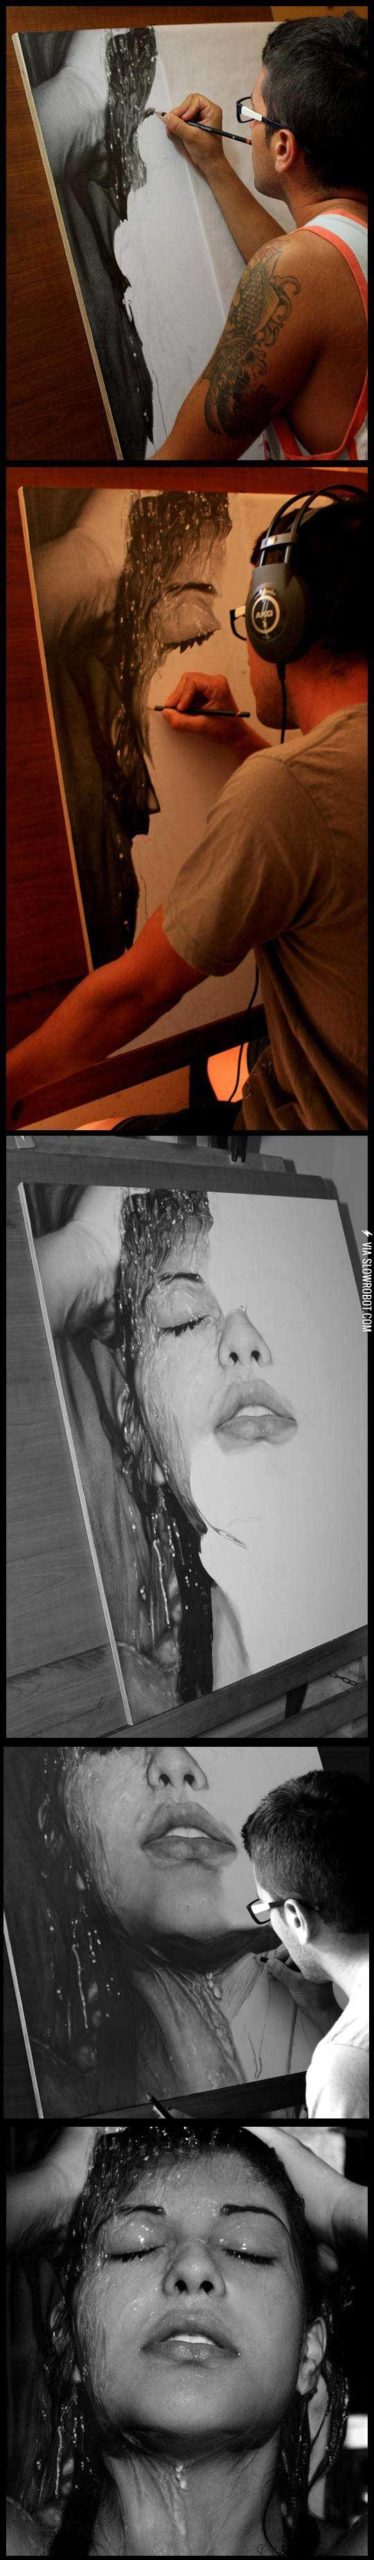 Photorealistic+Pencil+Drawing